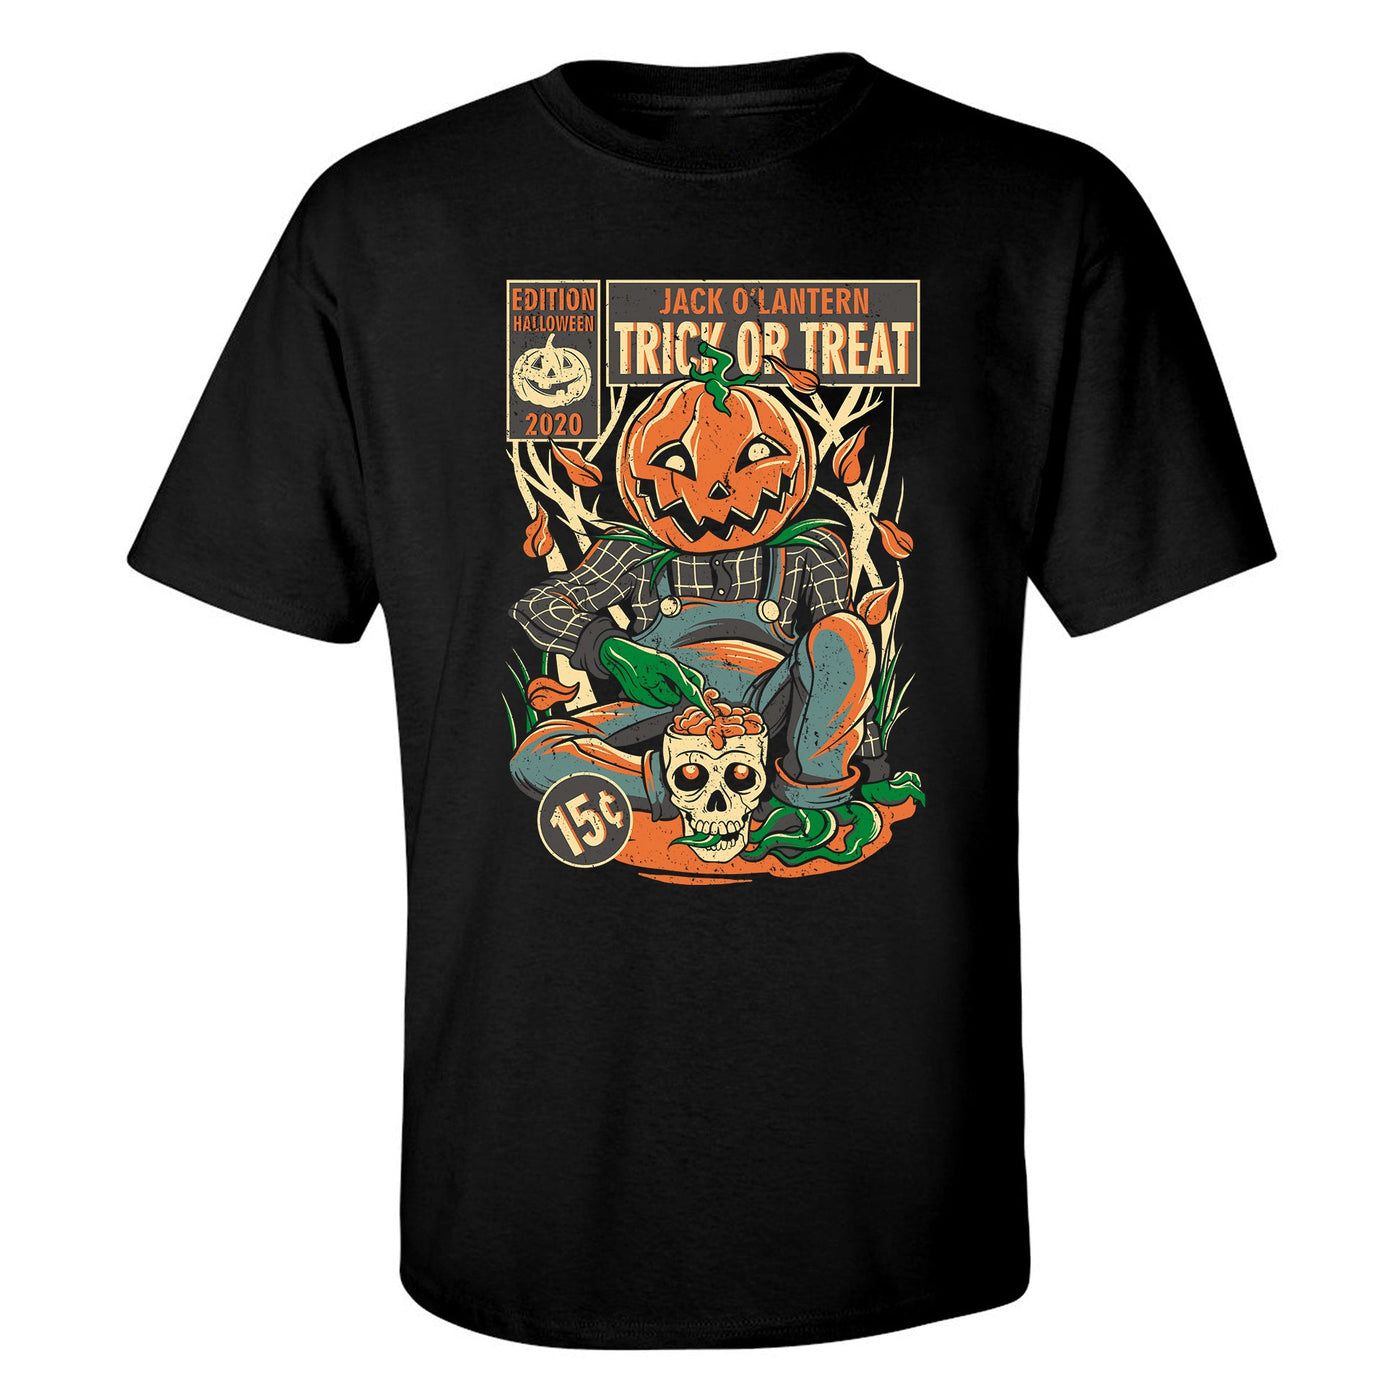 SPECIAL "Trick or Treat" Short Sleeve T-Shirt by Rodrigo Tannus